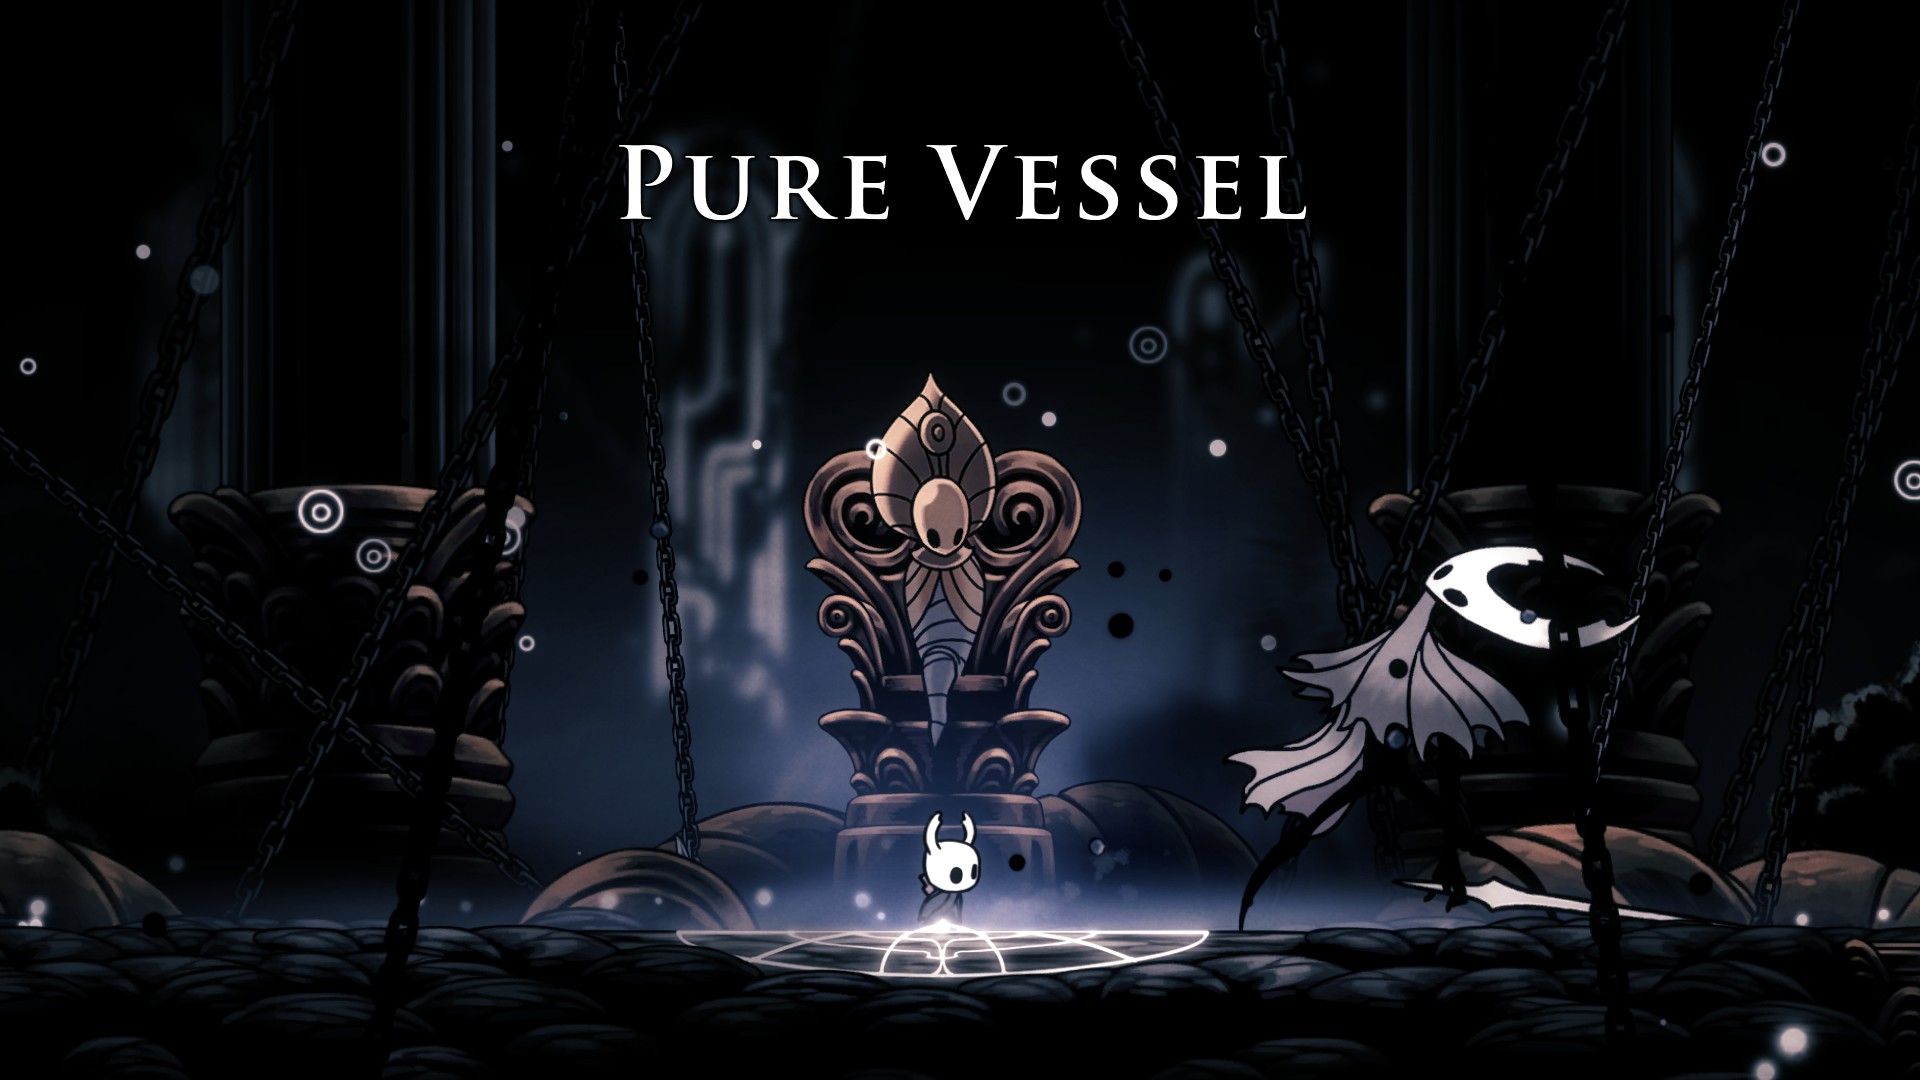 Steam Community - Screenshot - Facing Pure Vessel!